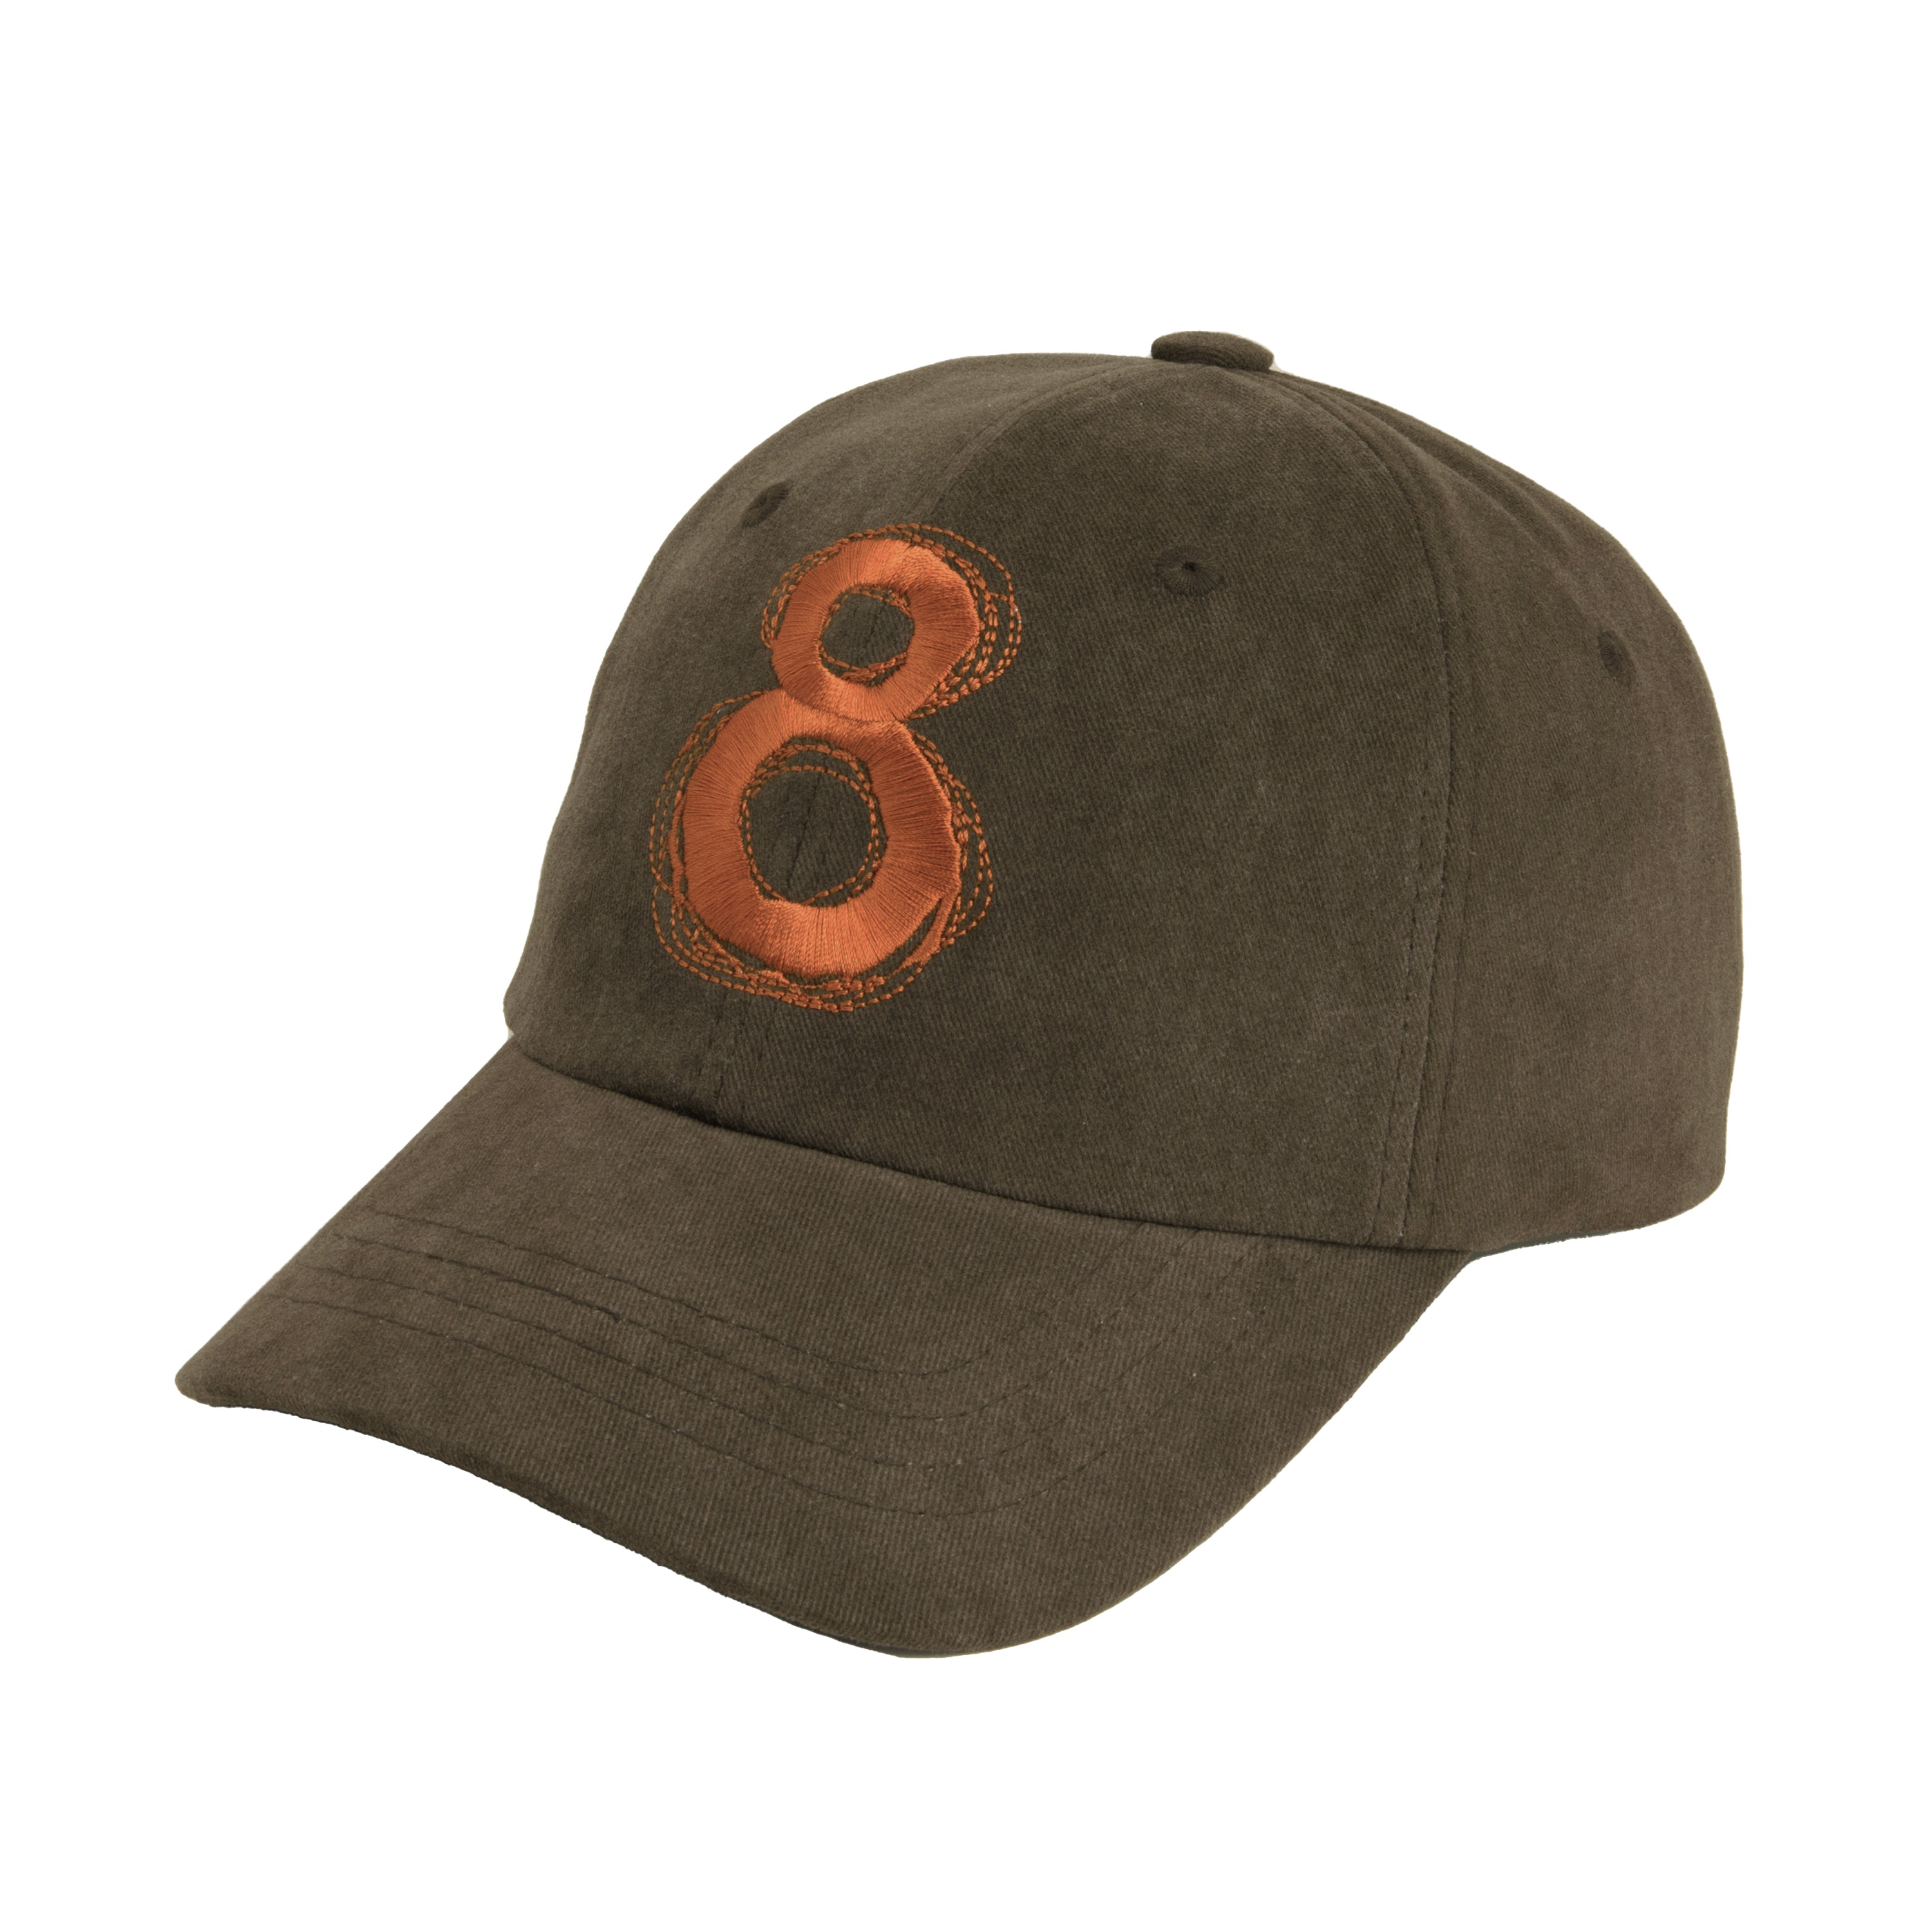 8 logo ball cap - Olive Brown